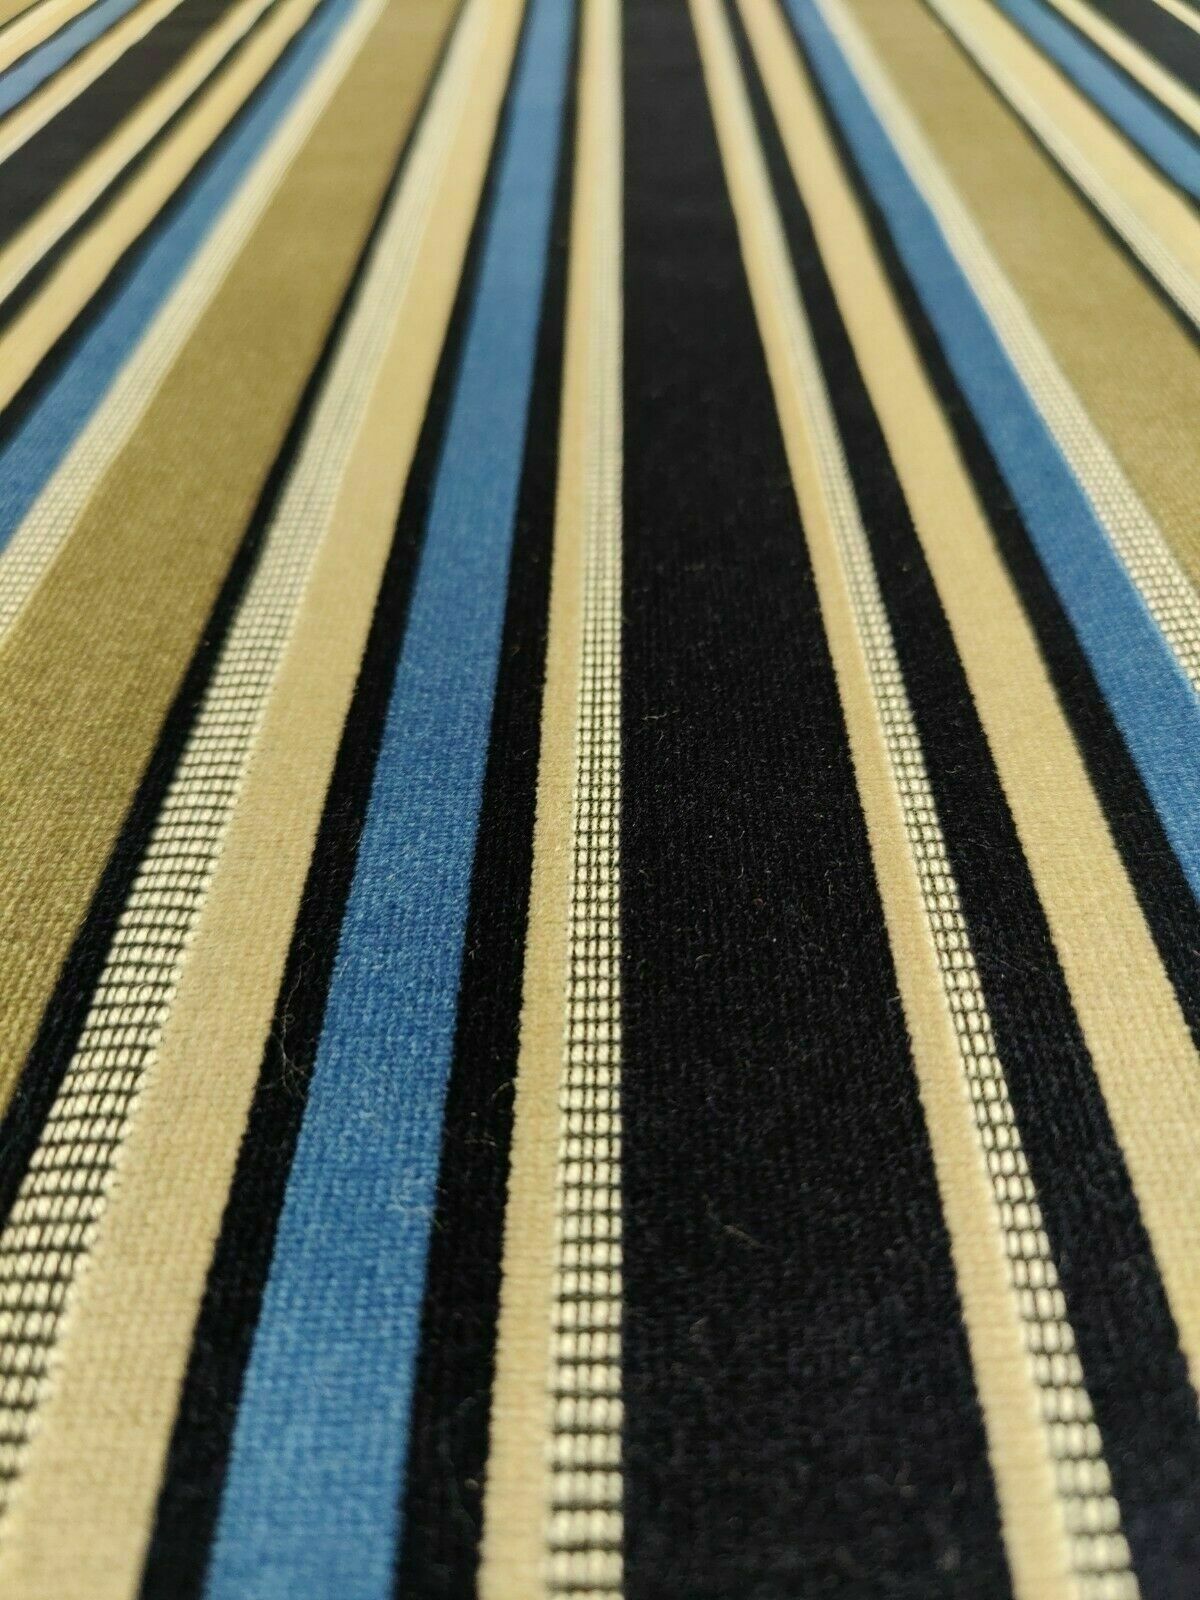 Panaz Ravello Navy/Mocha Upholstery Fabric 1.7 Metres